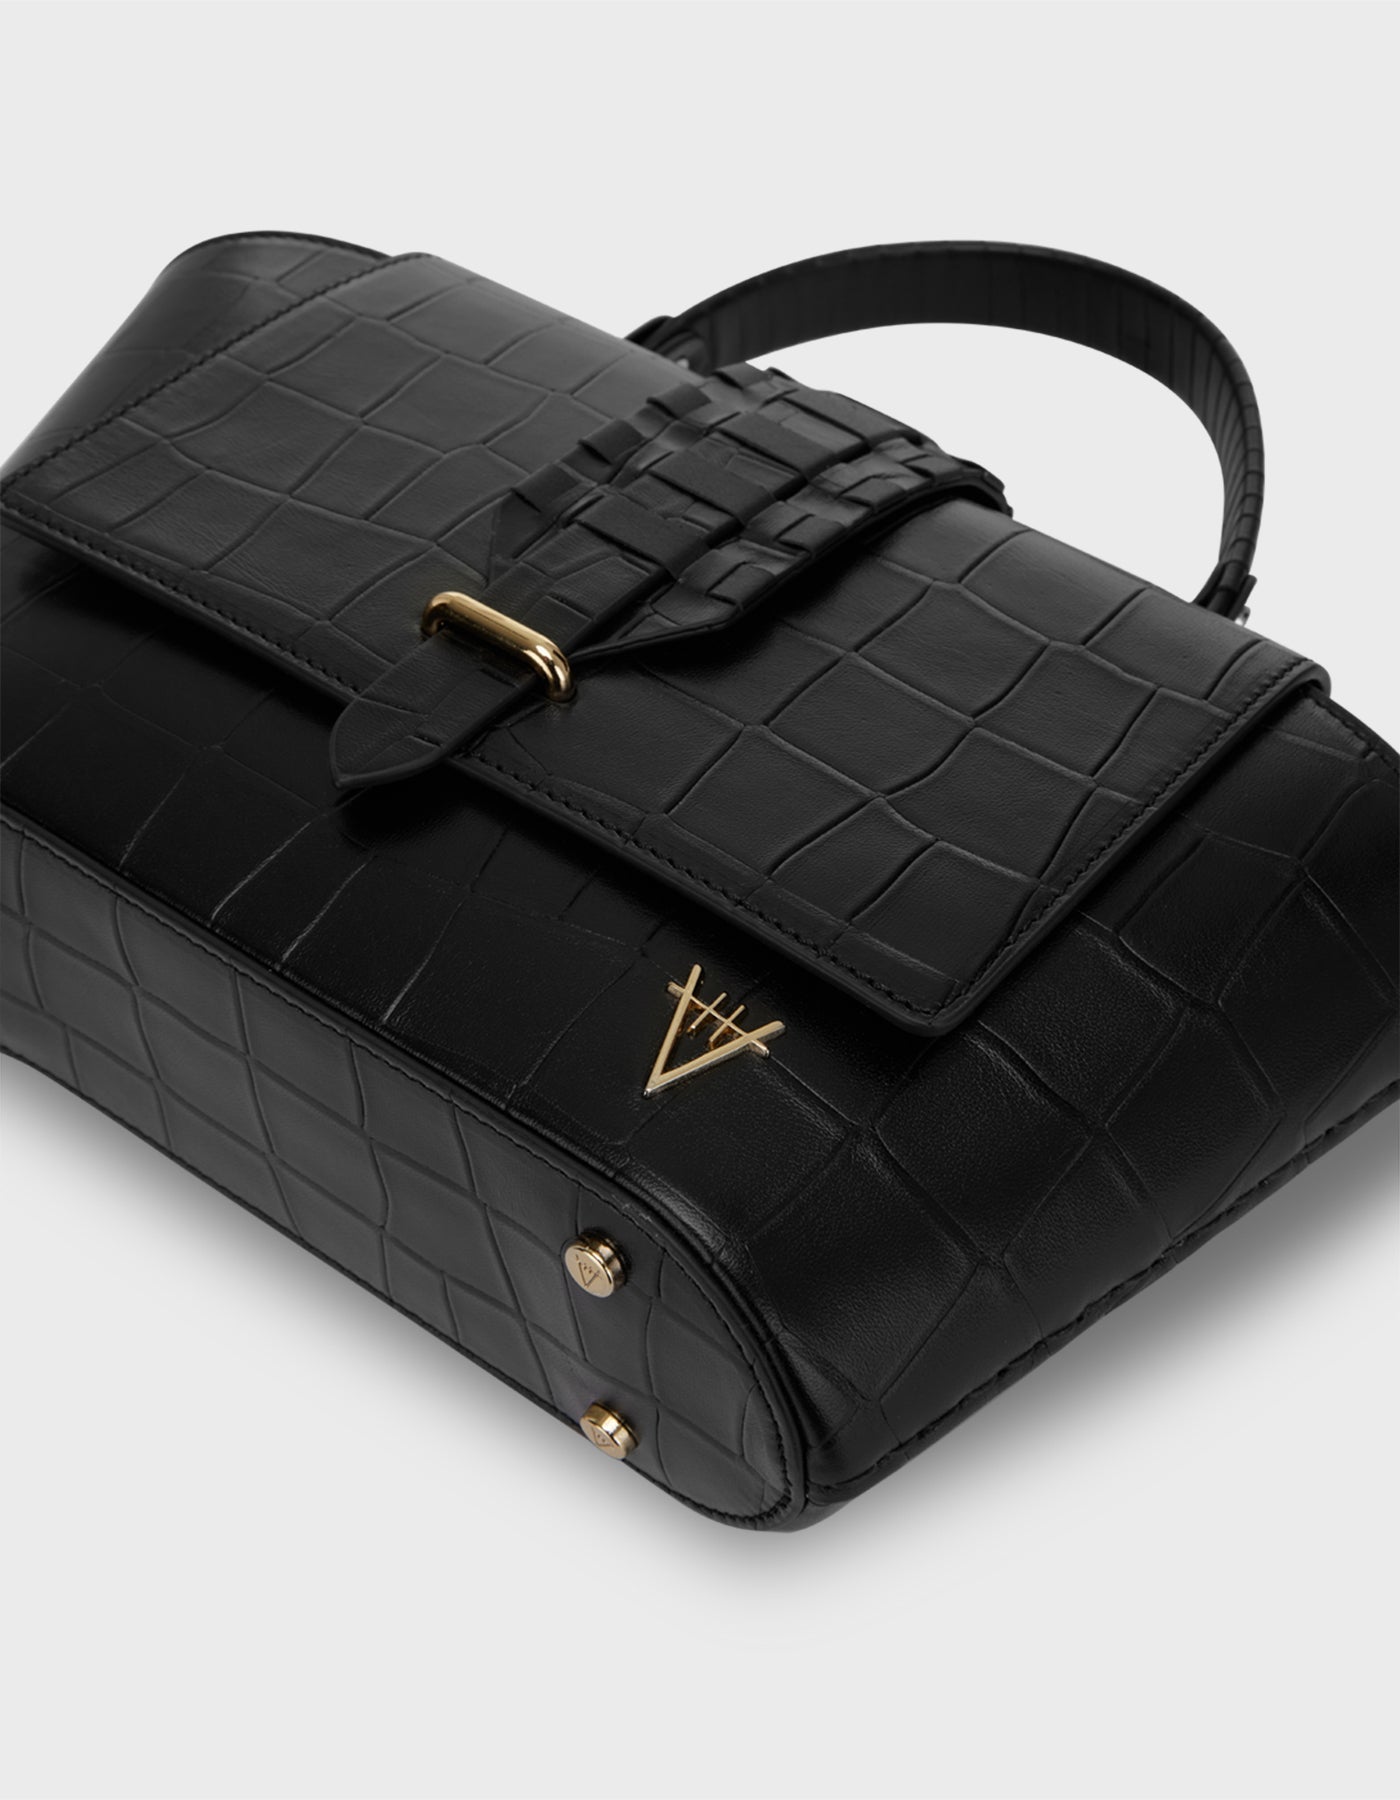 HiVa Atelier | Ventus Shoulder Bag Croco Effect Black | Beautiful and Versatile